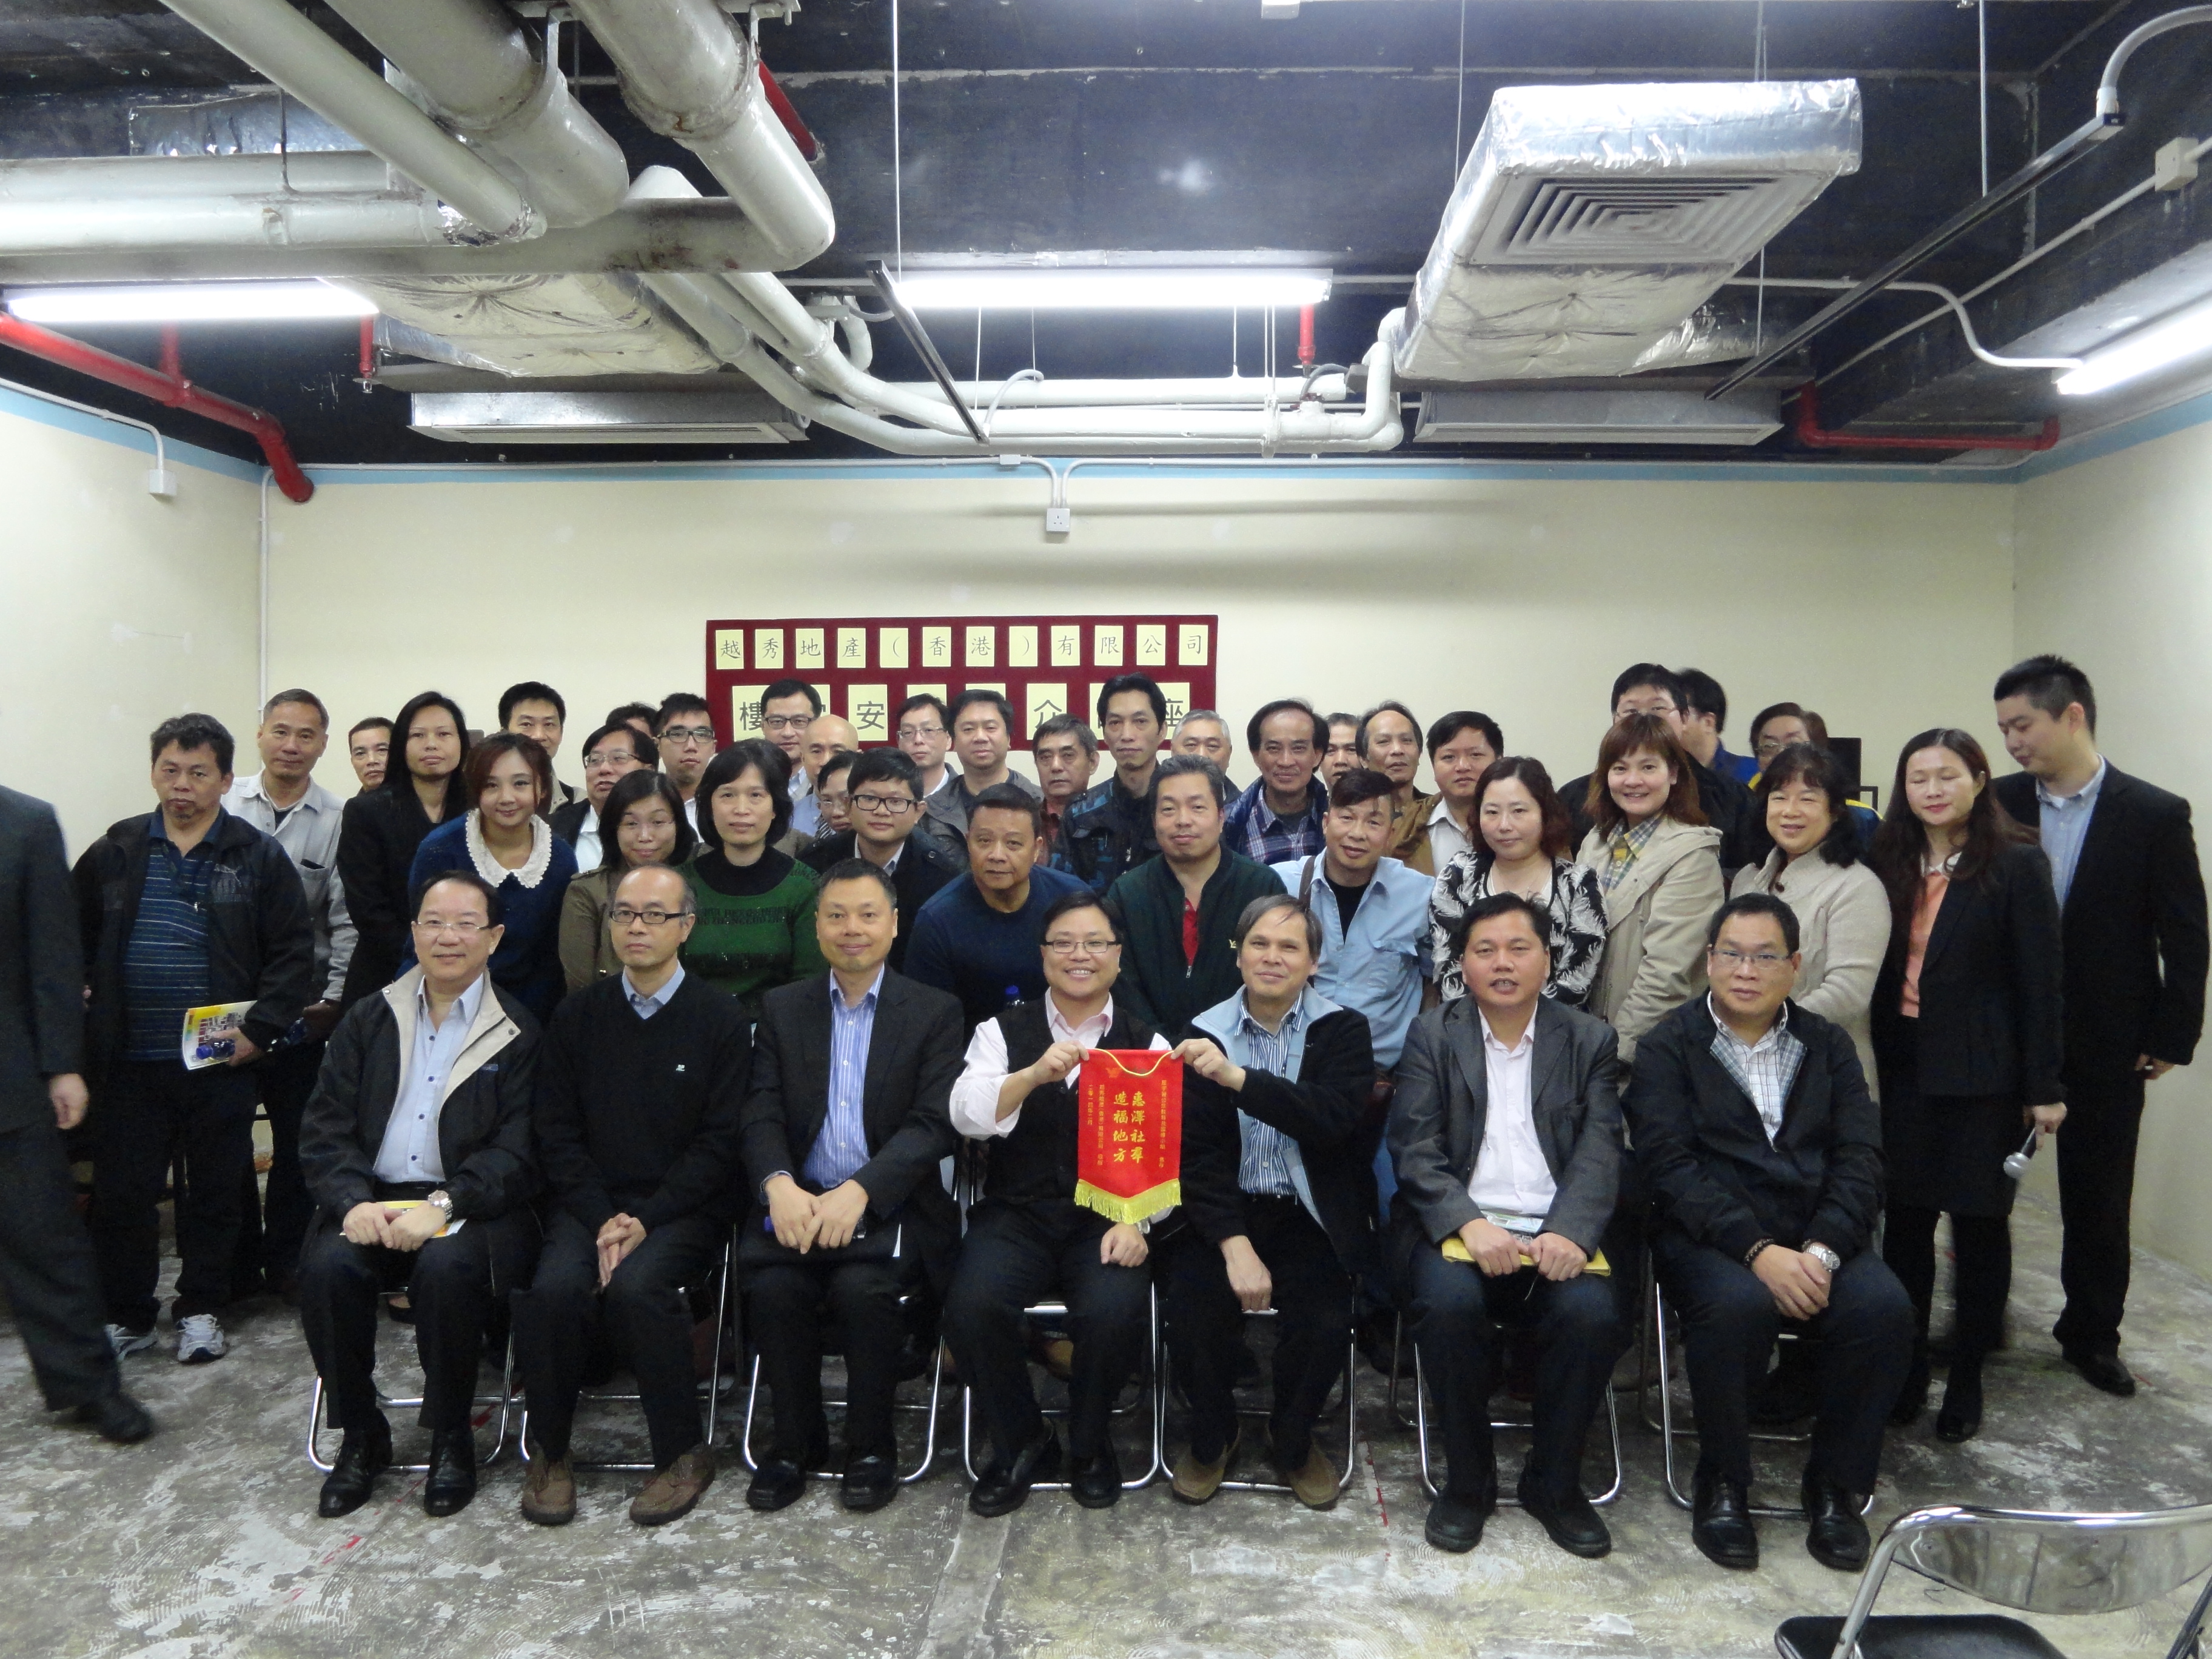 Yue Xiu Property Management Ltd